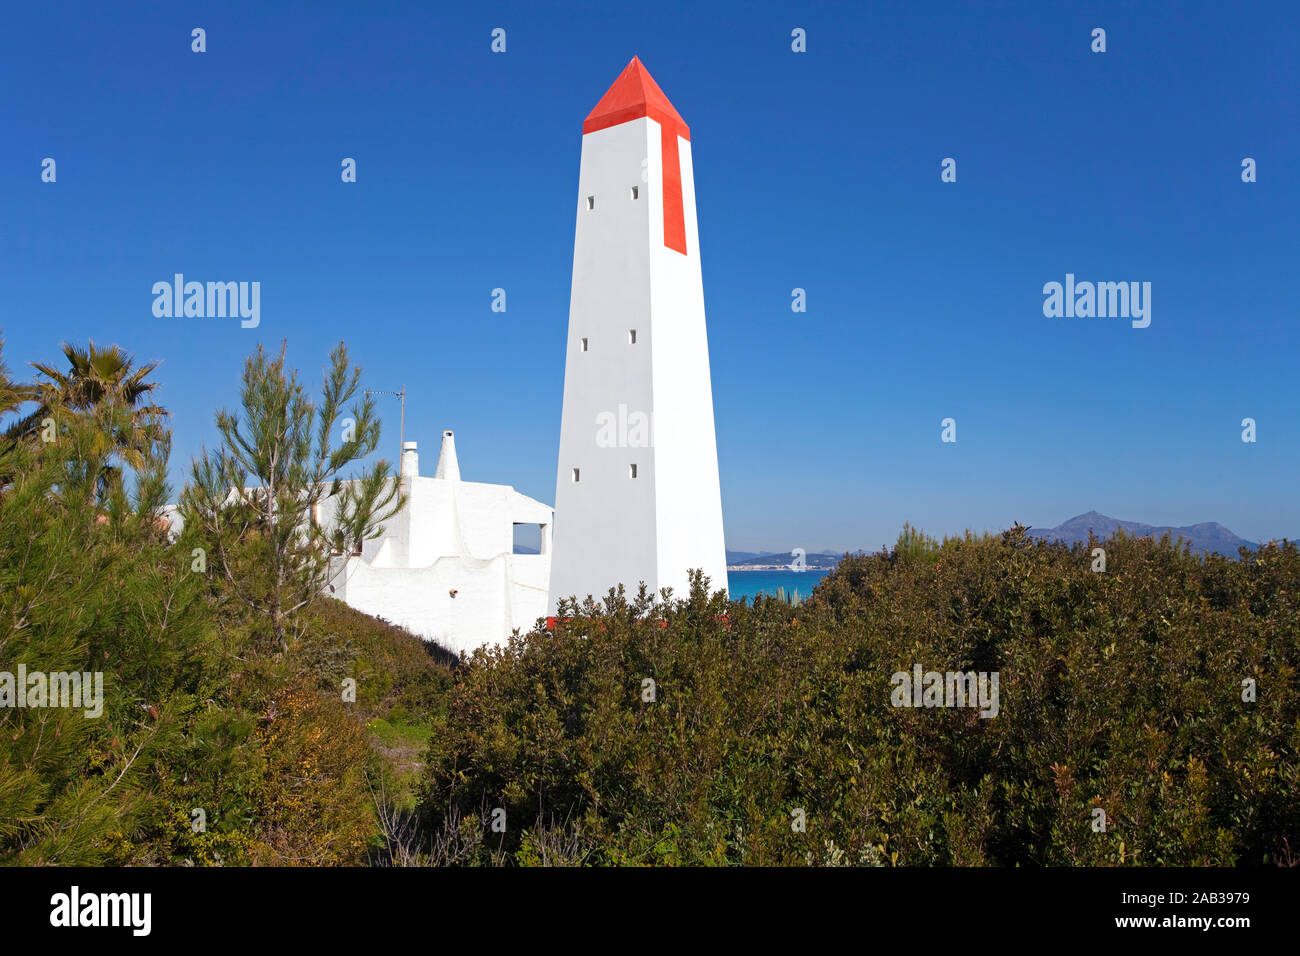 Torres d'enfilaciò, torre di navigazione la spiaggia di Can Picafort, baia di Alcudia, Maiorca, isole Baleari, Spagna Foto Stock